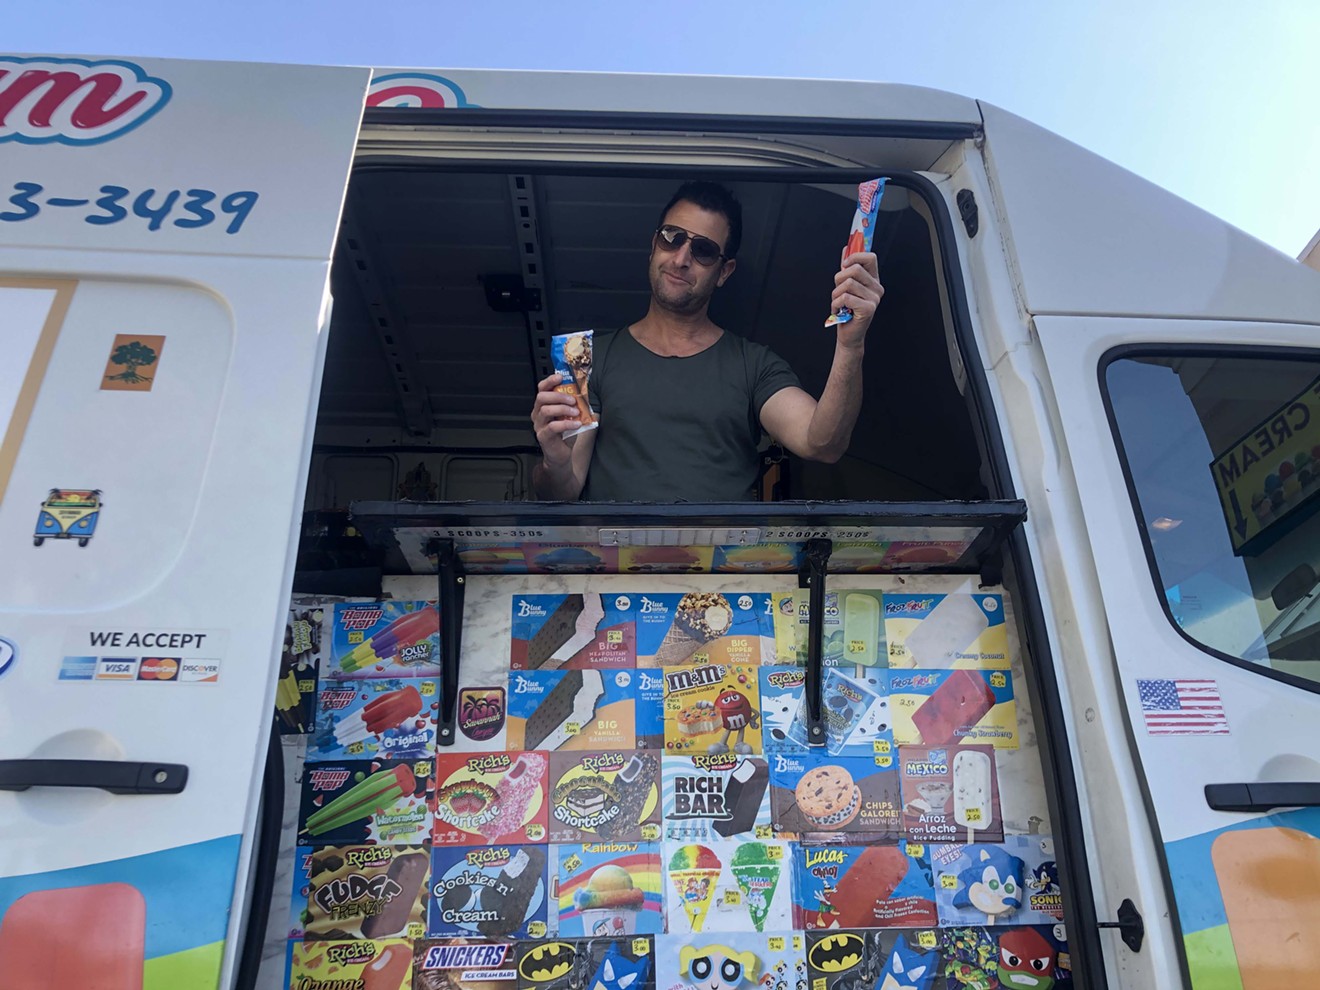 Dotan Organ sells ice cream out of his mobile Toti Ice Cream truck.